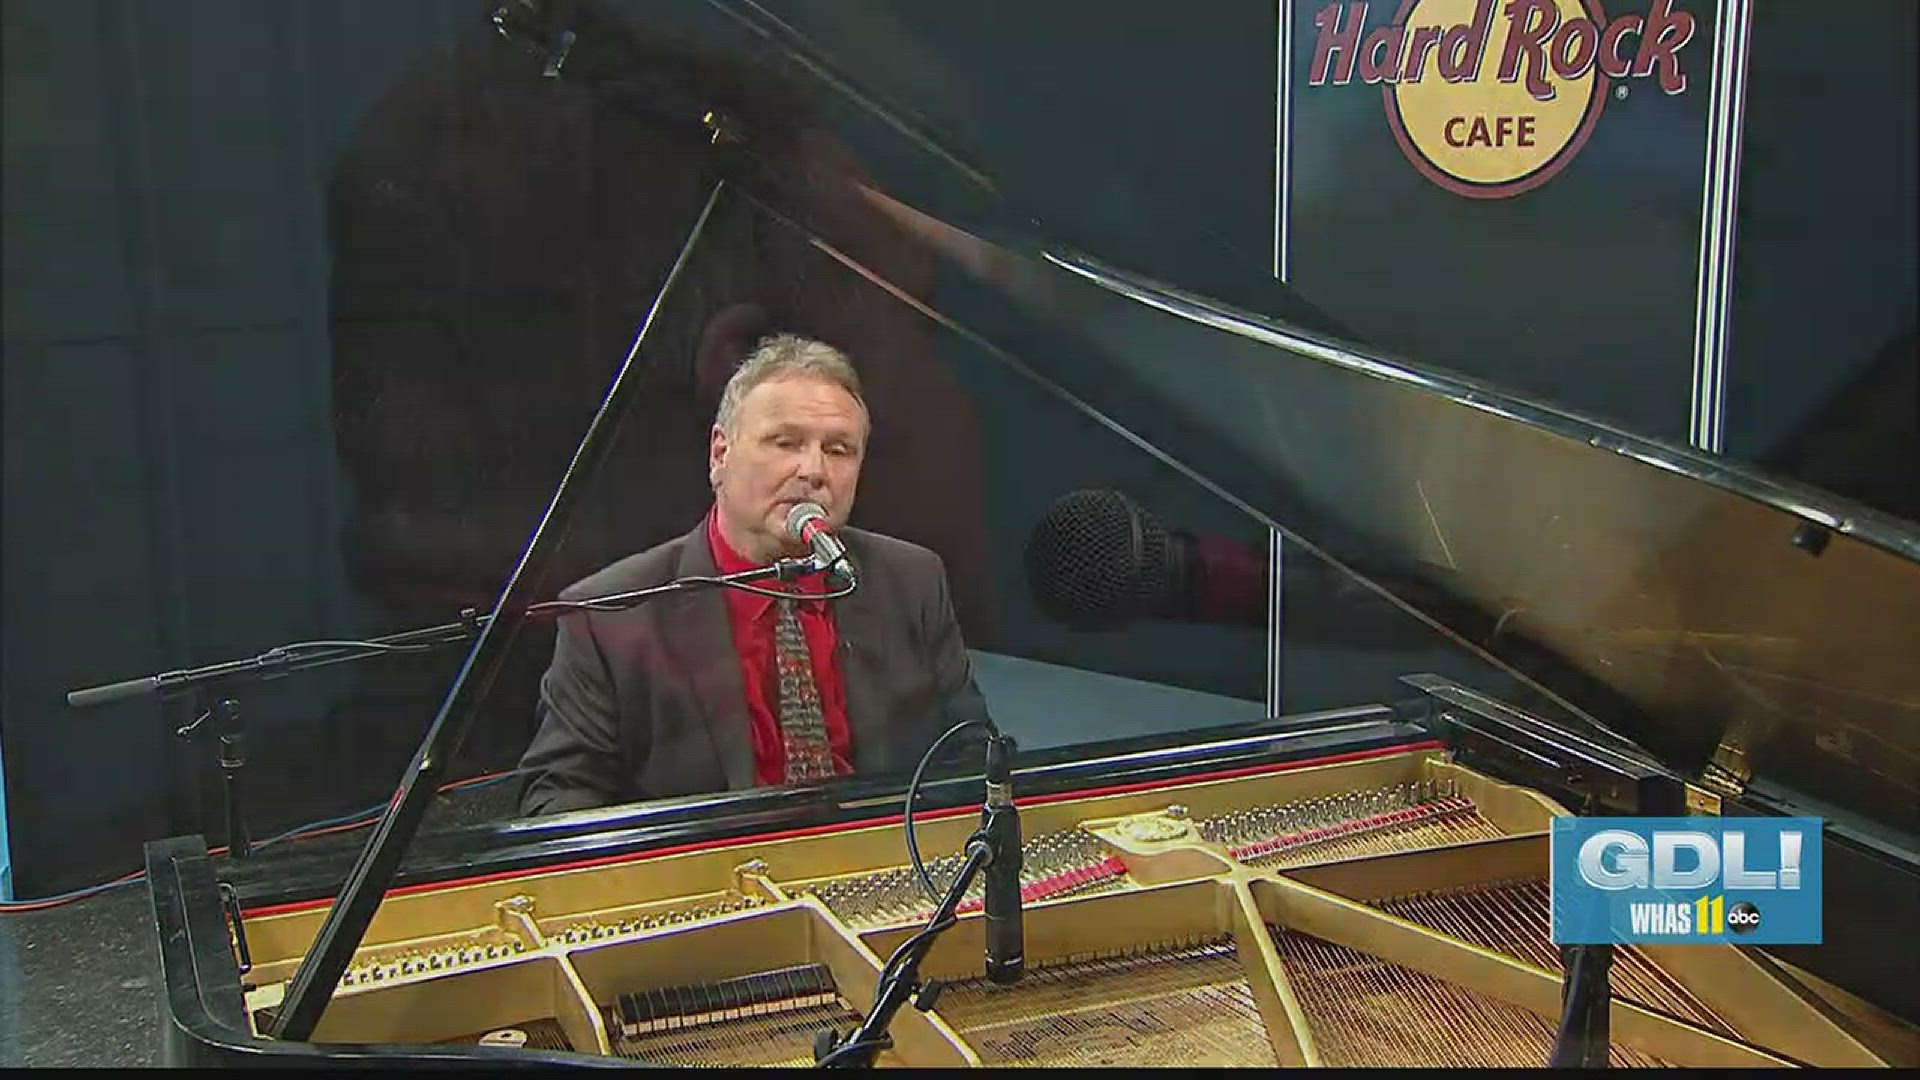 Pianist Jeff Rehmet serenades us with love songs in honor of Valentine's Day.